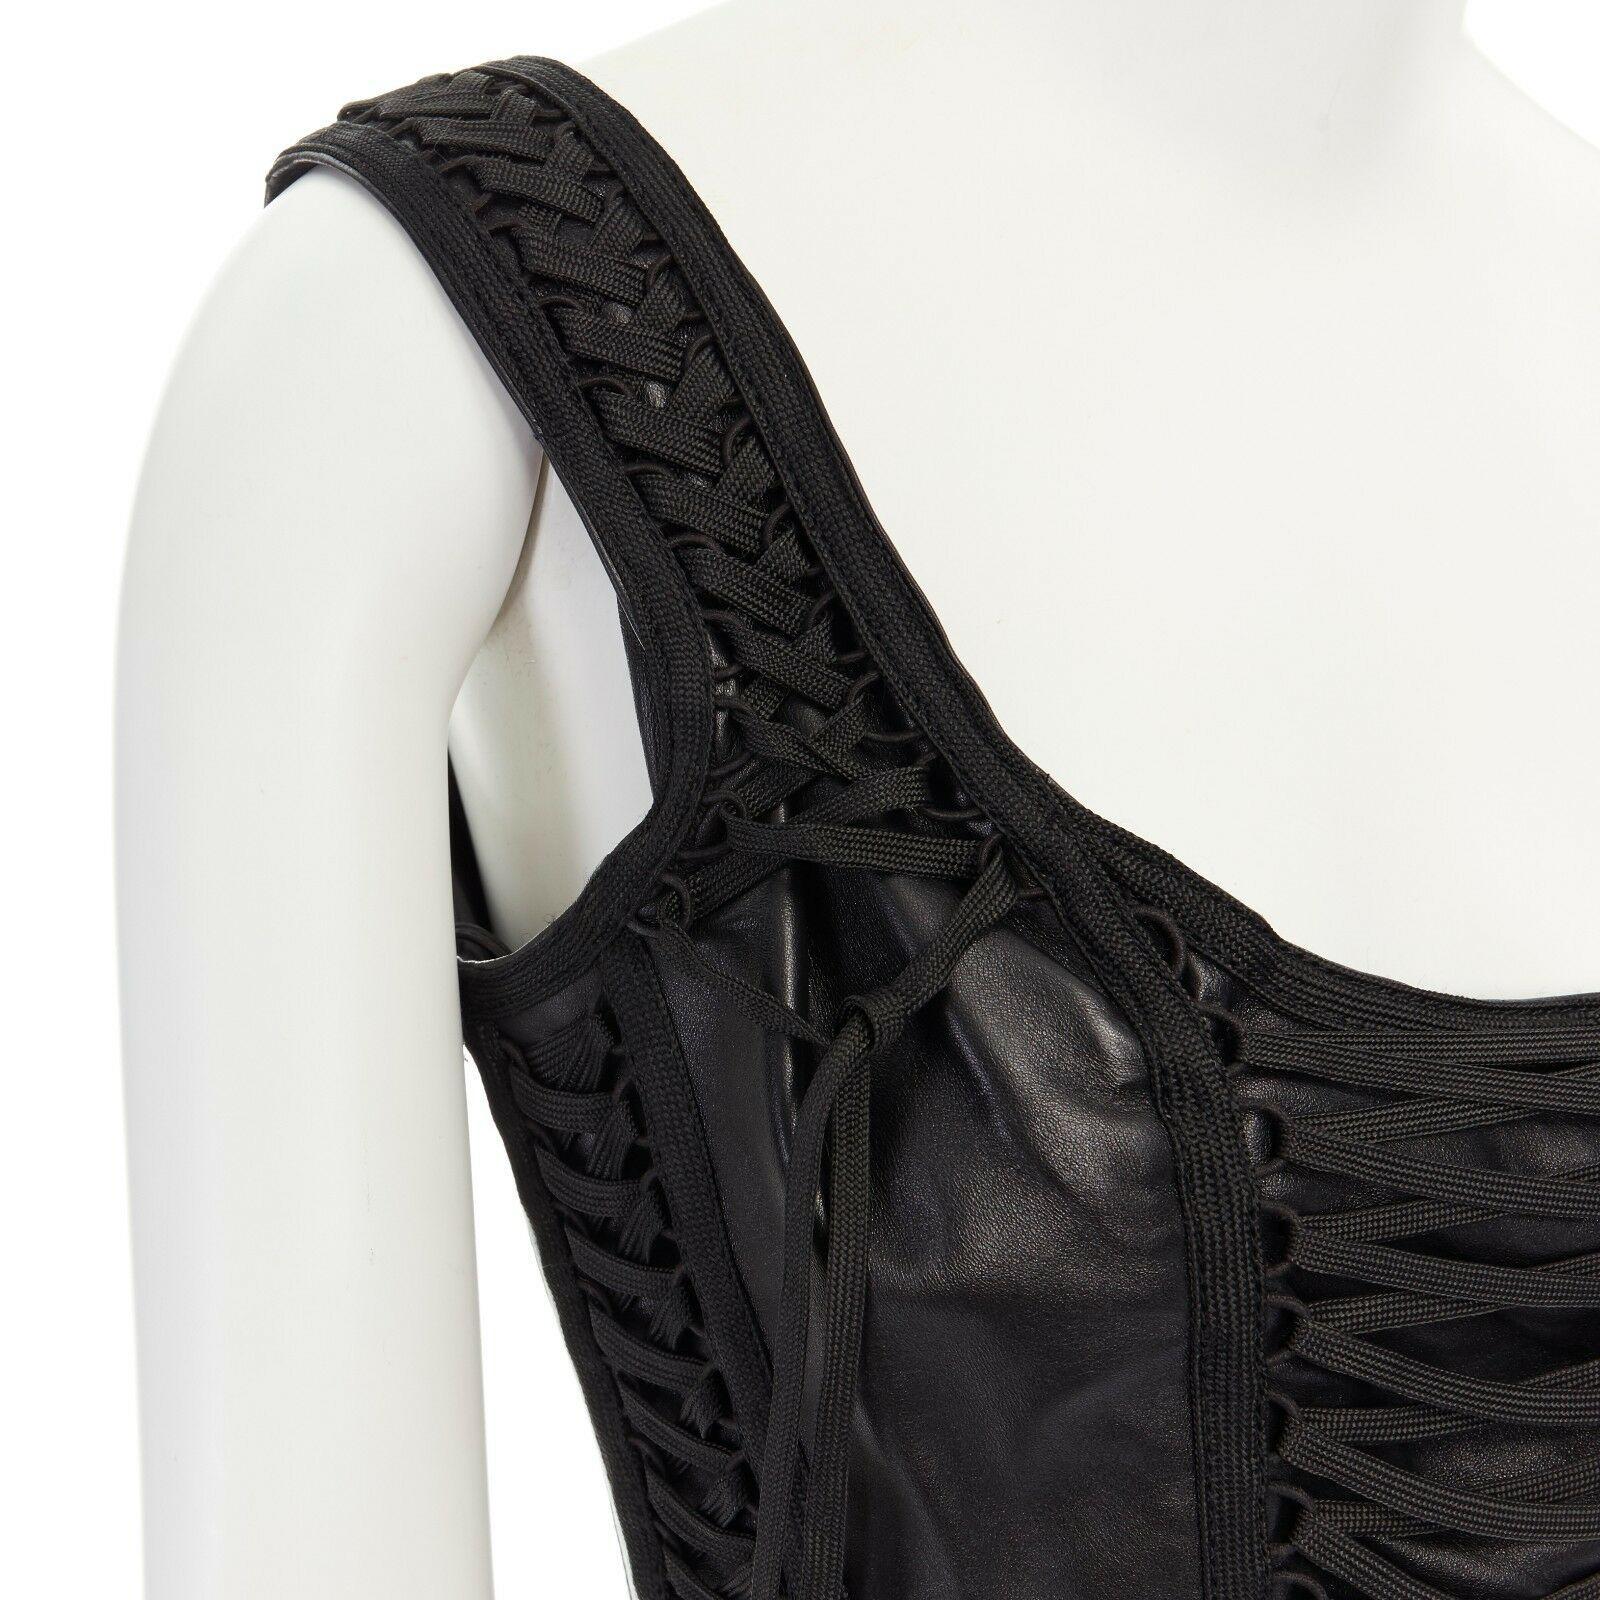 CHRISTIAN DIOR GALLIANO Vintage black leather laced corset vest top FR42 L 2